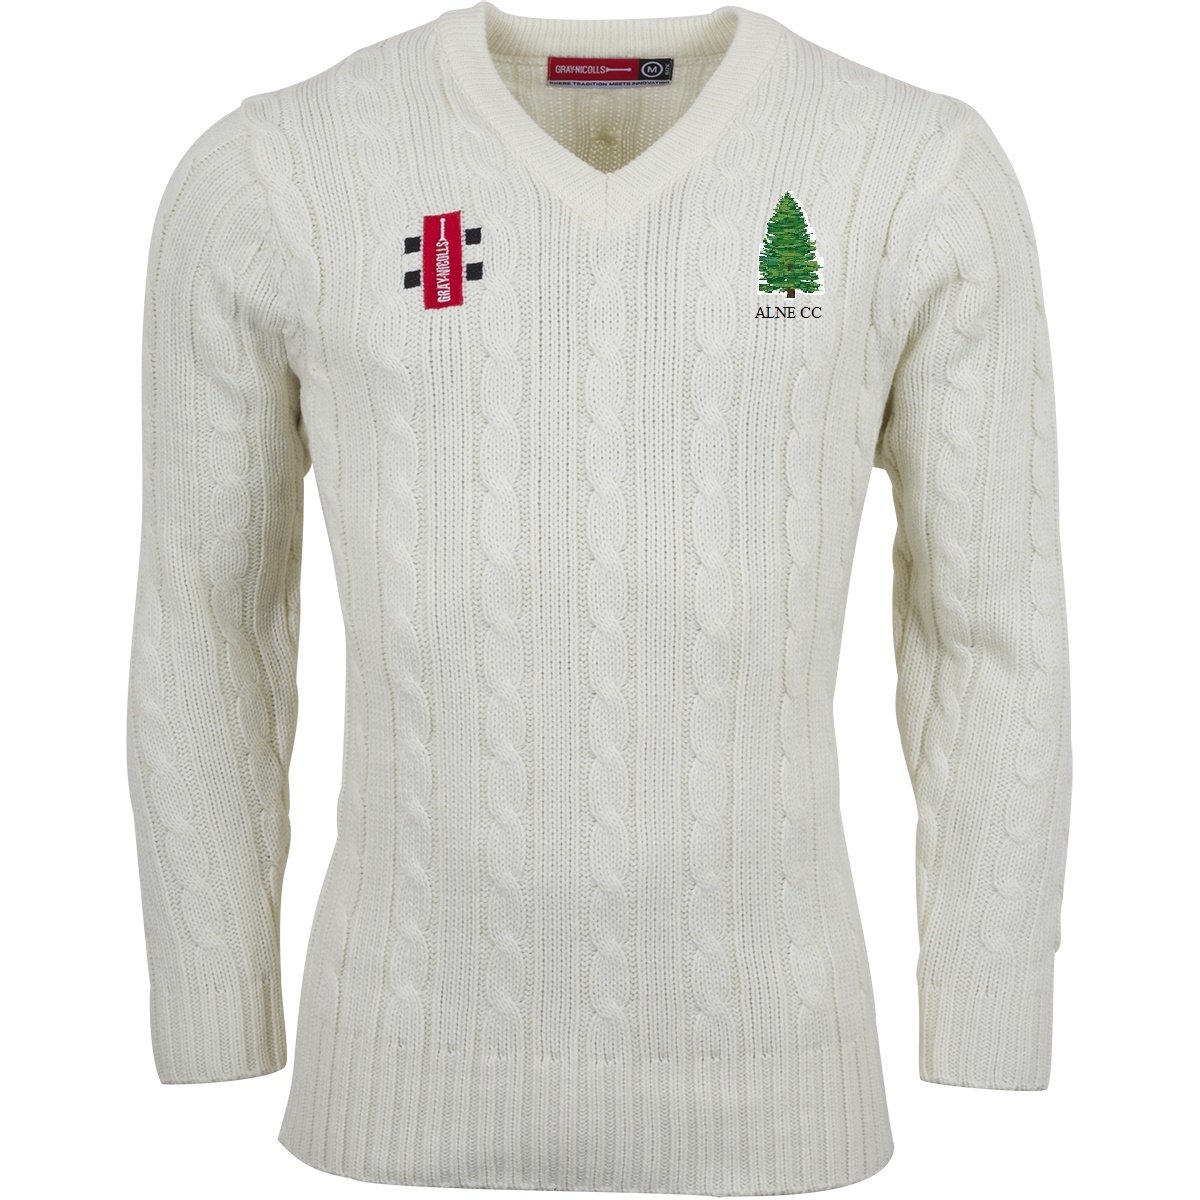 Alne Acryclic Woolen Style Long Sleeve Cricket Sweater